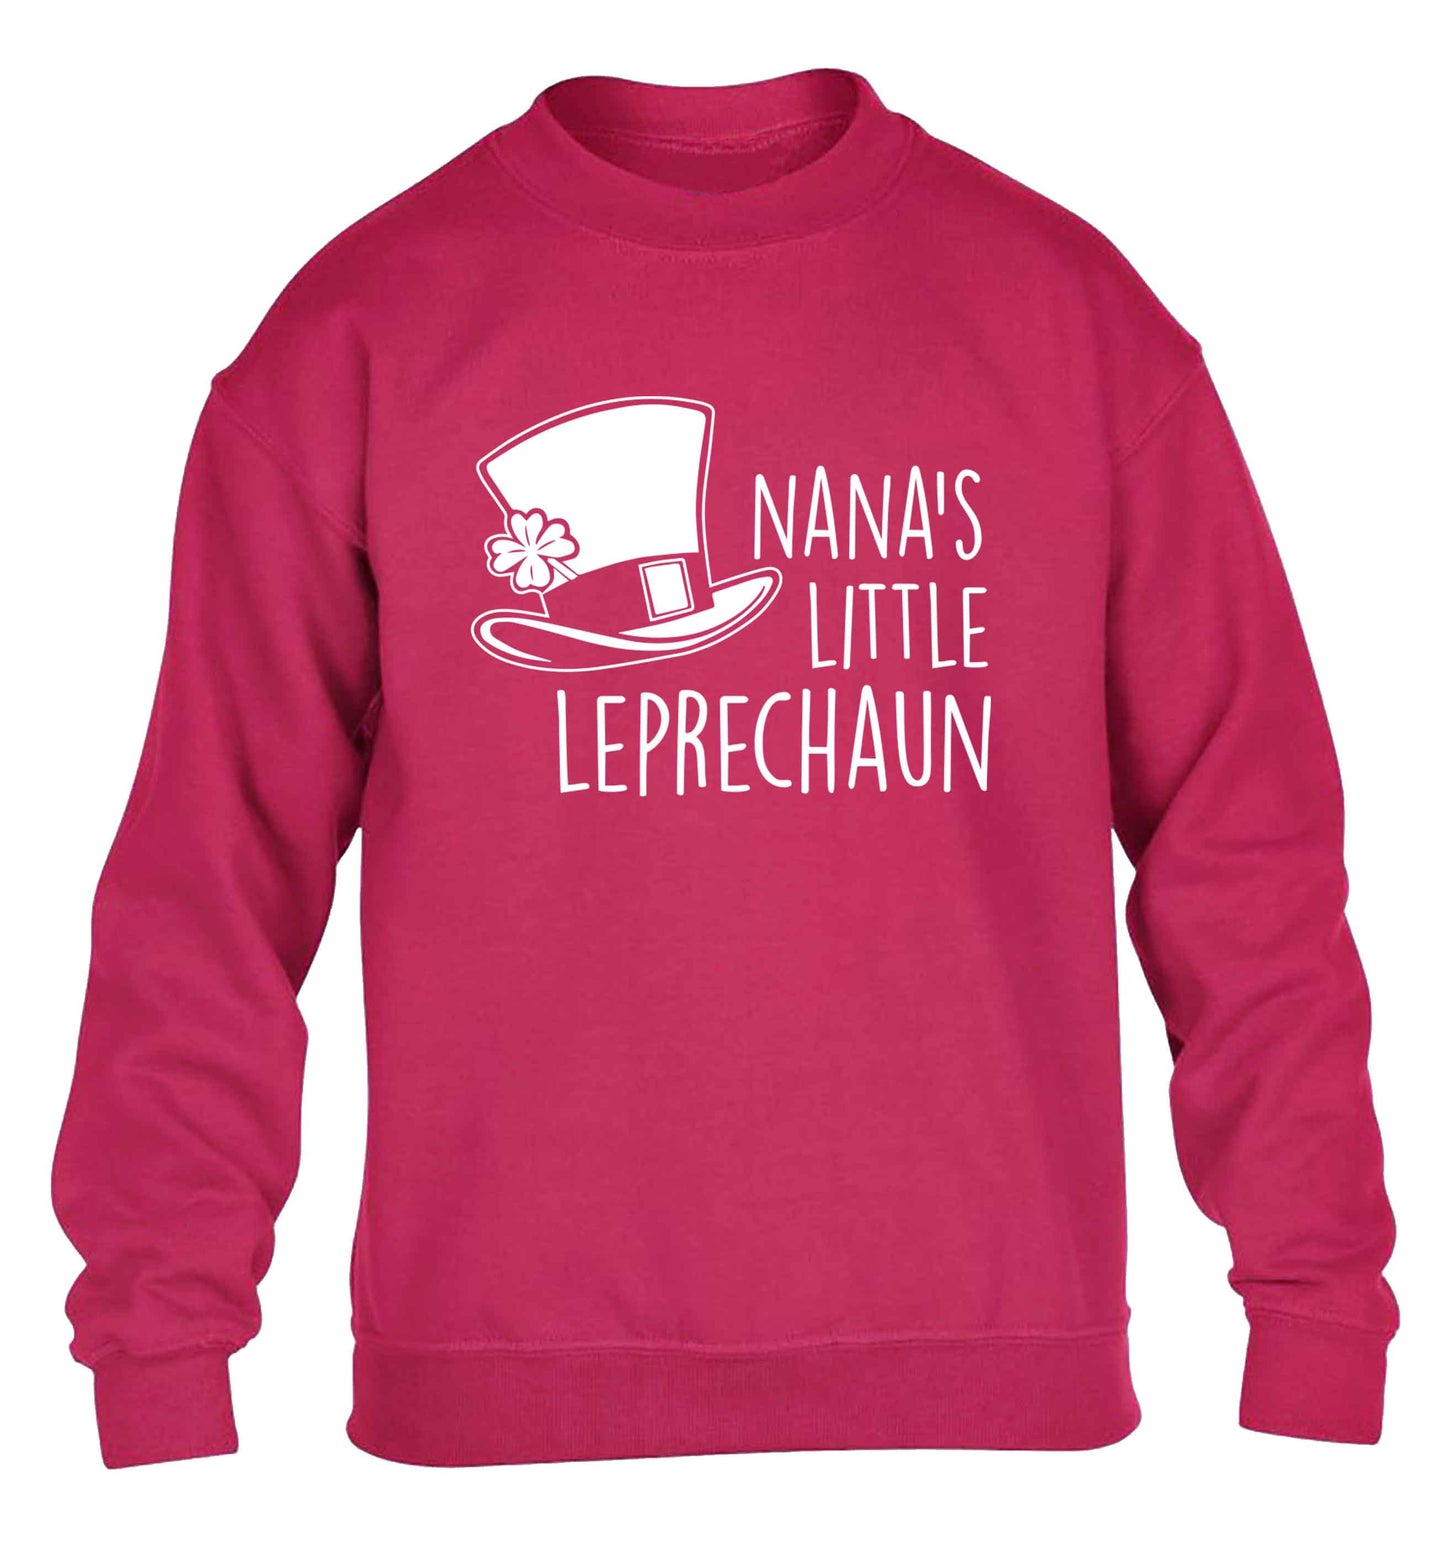 Nana's little leprechaun children's pink sweater 12-13 Years